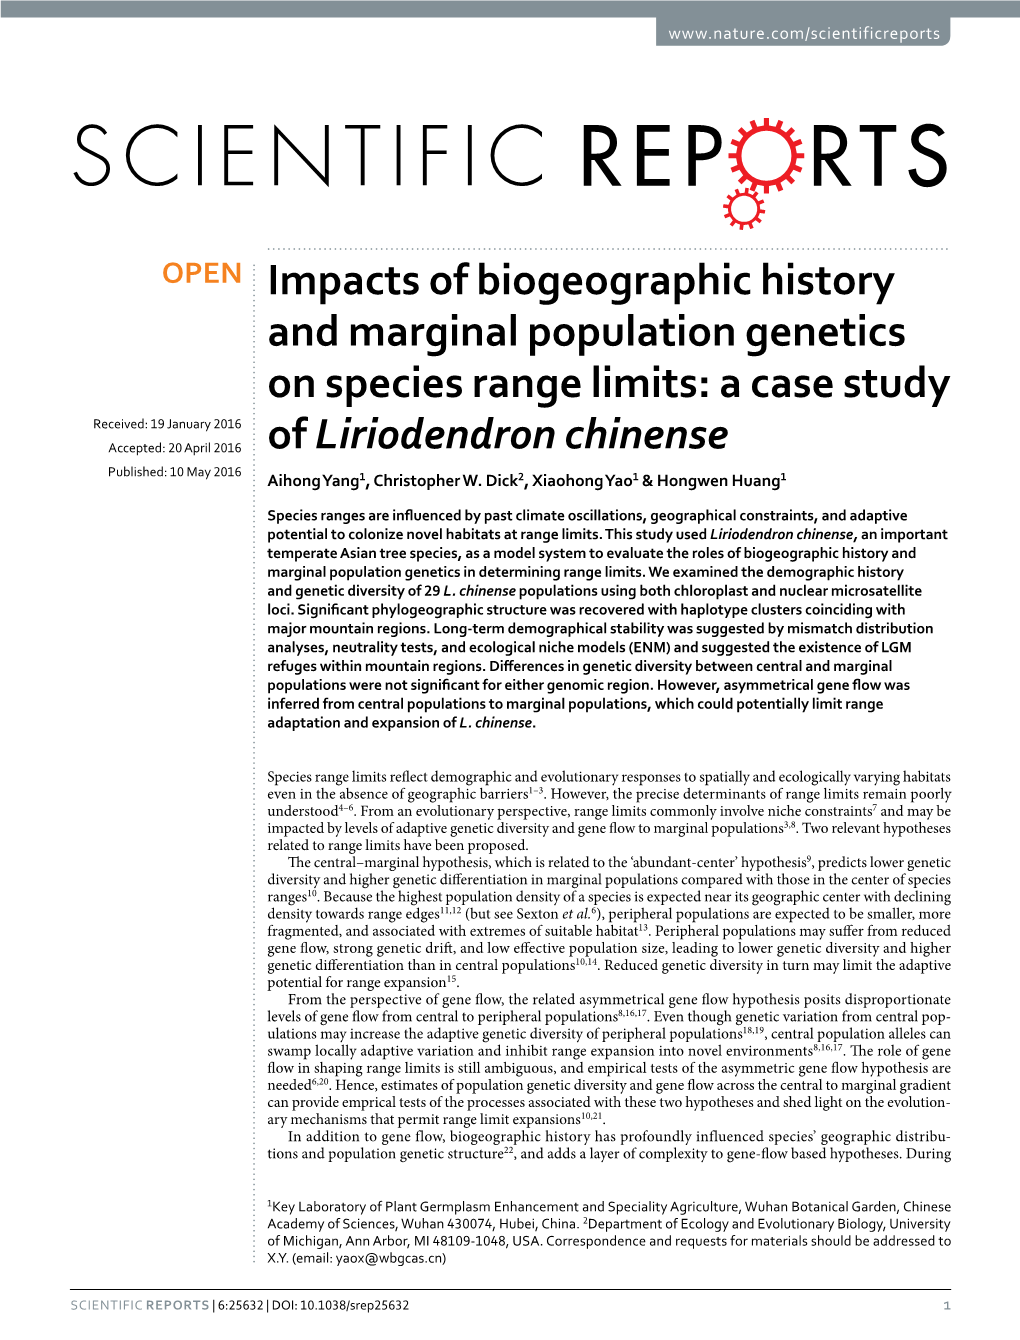 Impacts of Biogeographic History and Marginal Population Genetics On